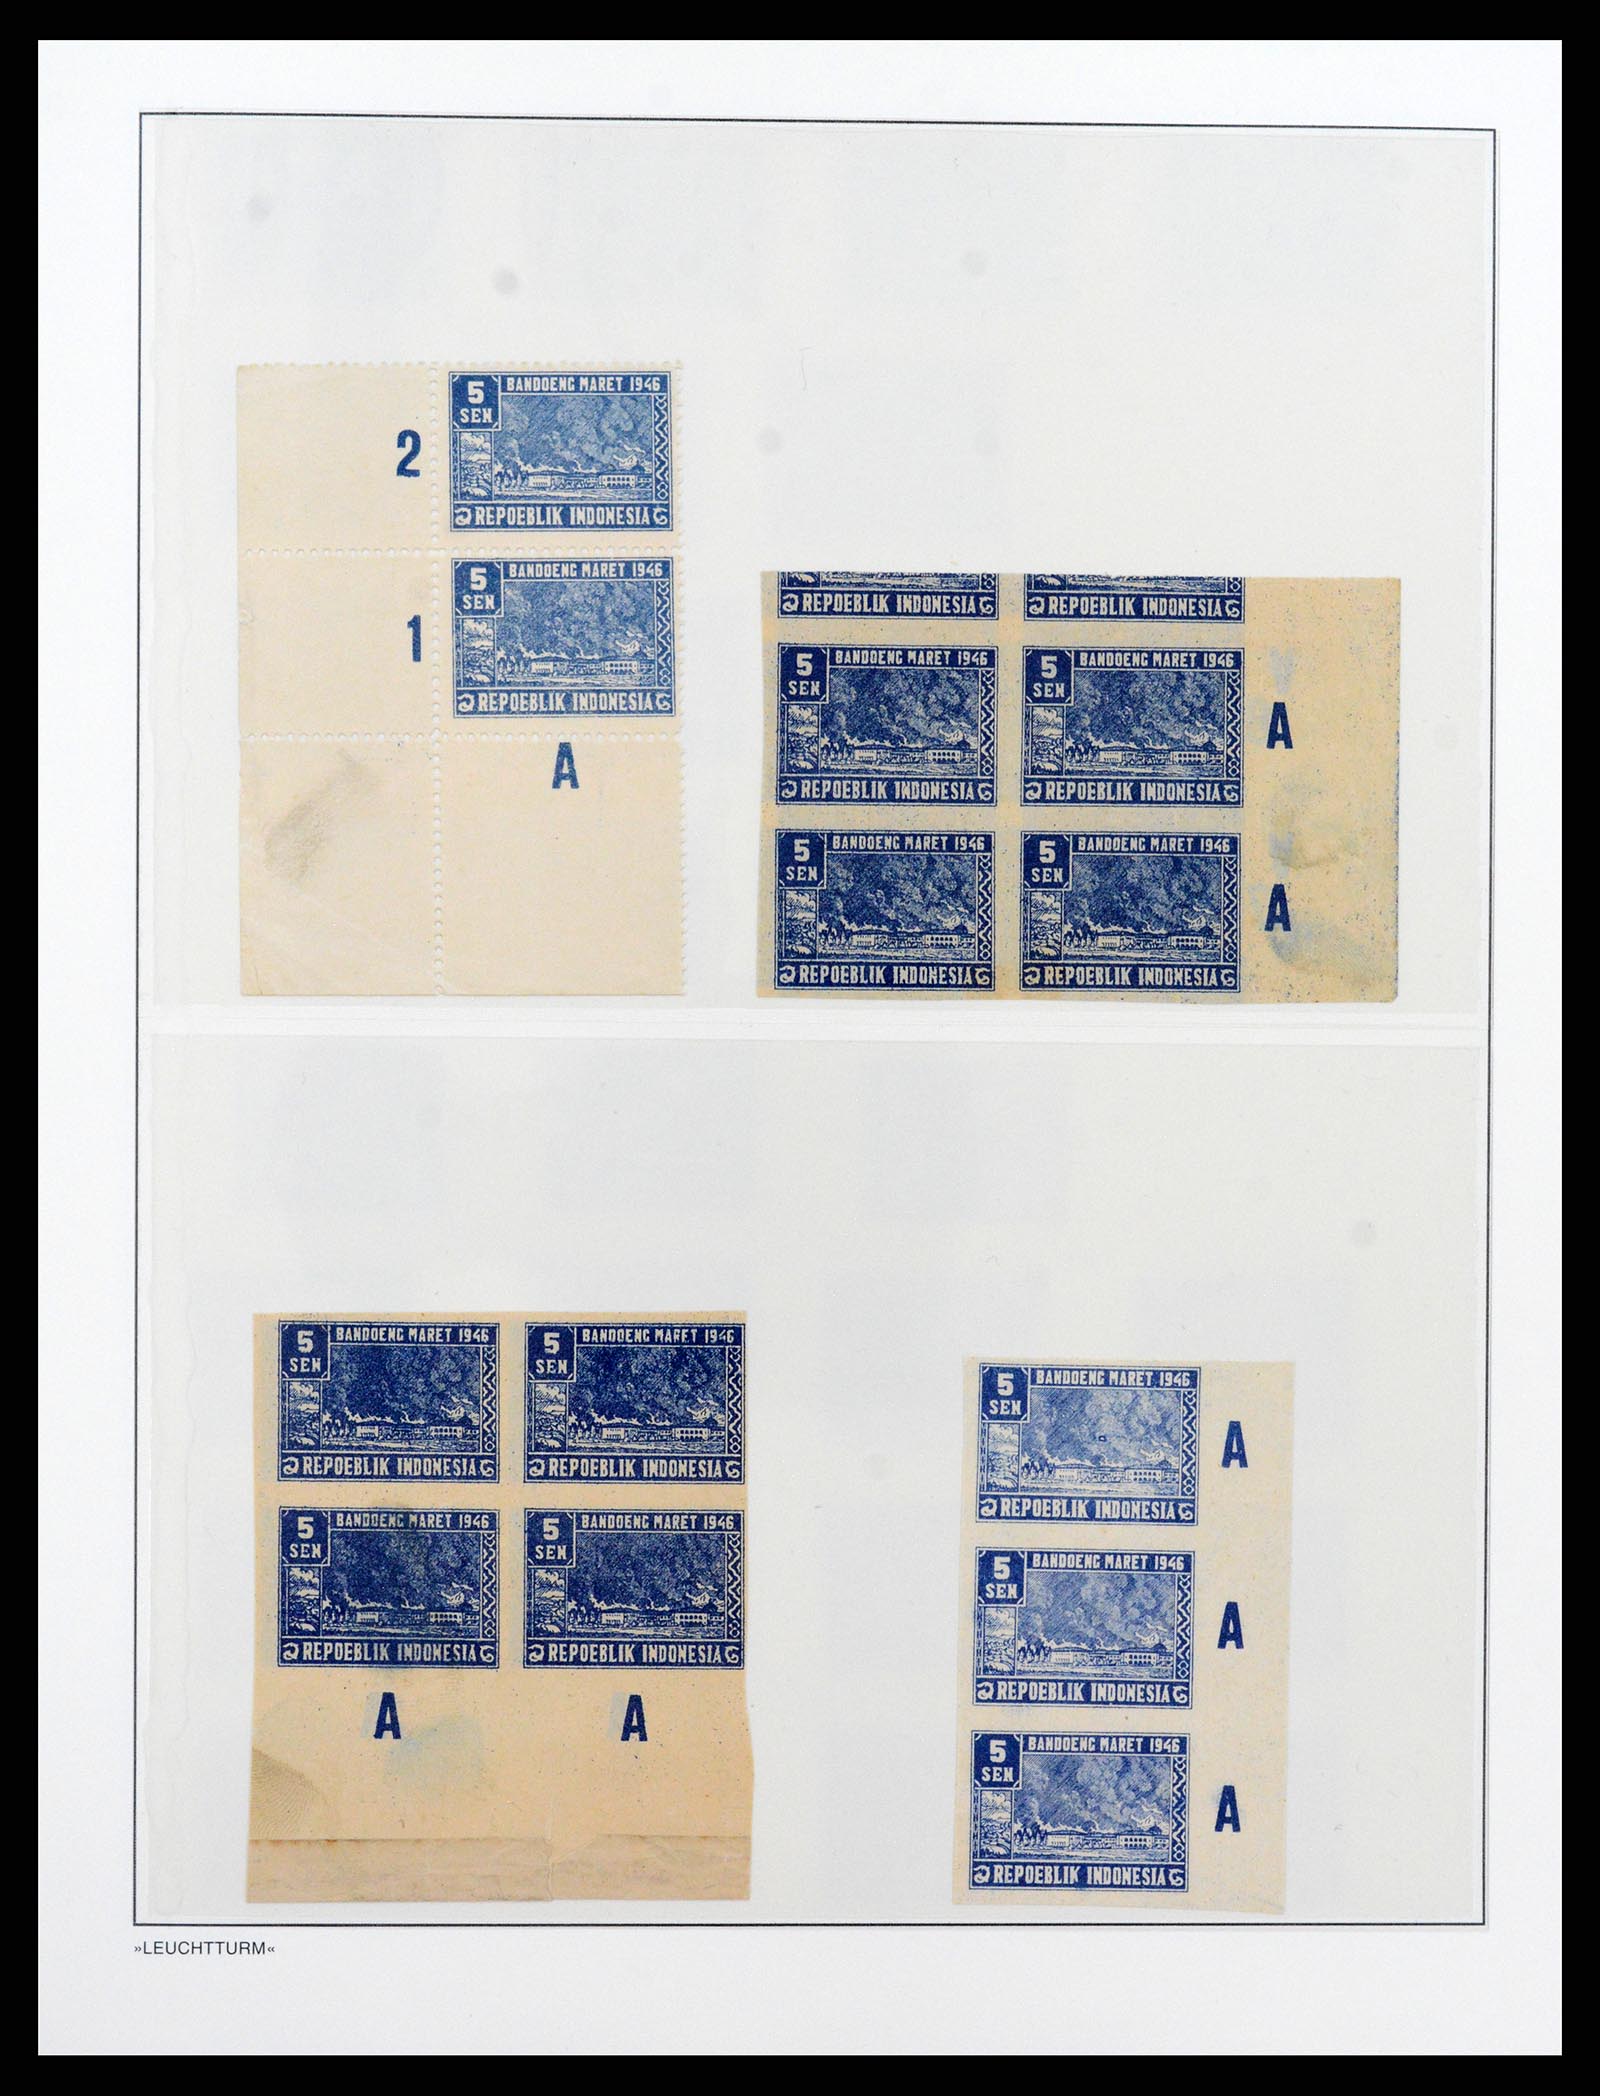 37435 017 - Stamp collection 37435 Indonesia interim period 1945-1948.